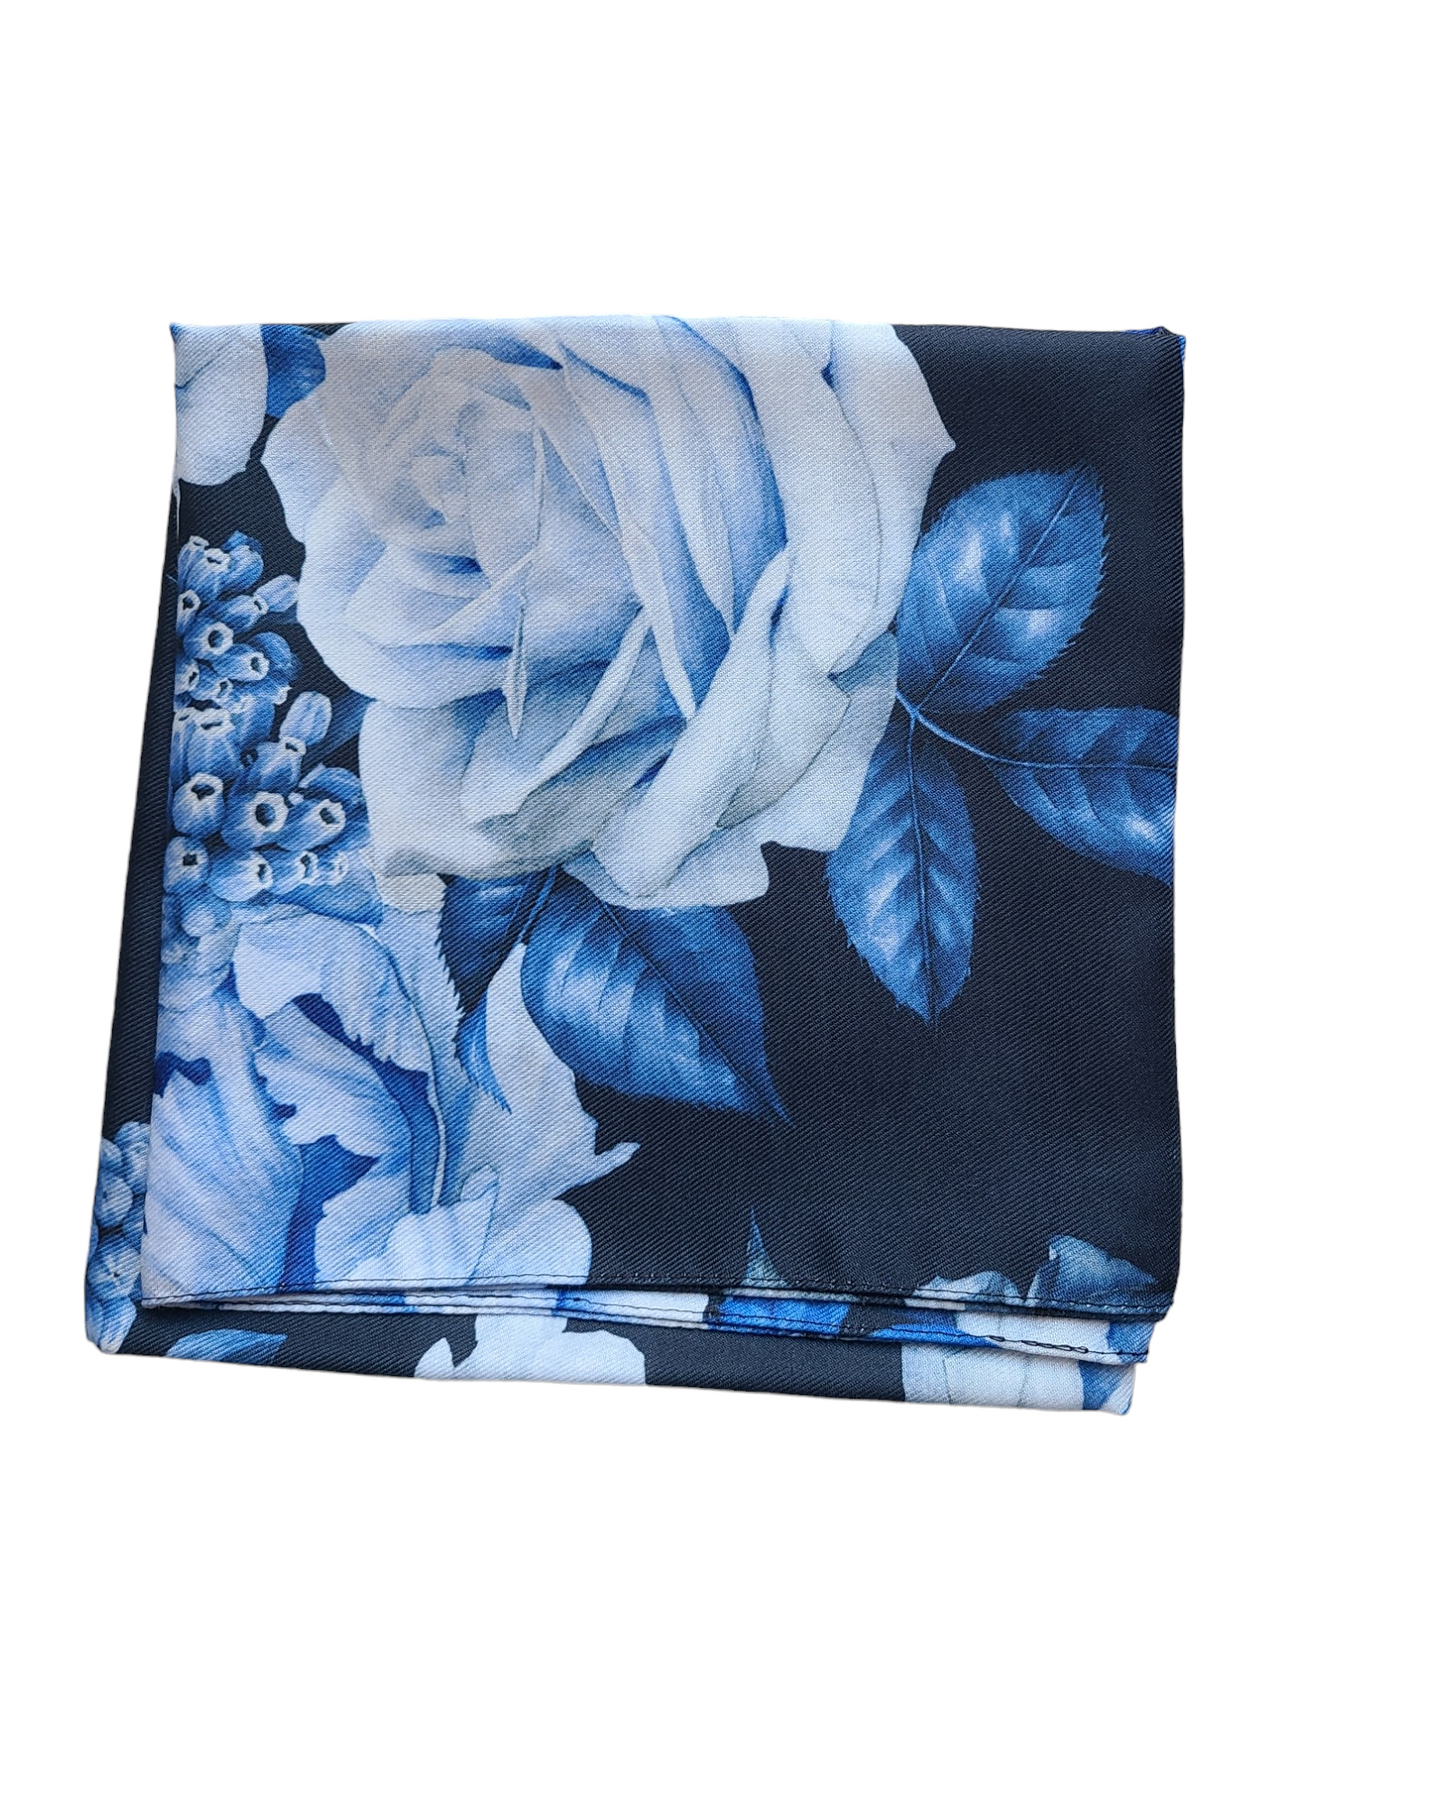 Blue Bells and White Roses Cotton Versatile Scarf - Keter Hayofi Mitpachot